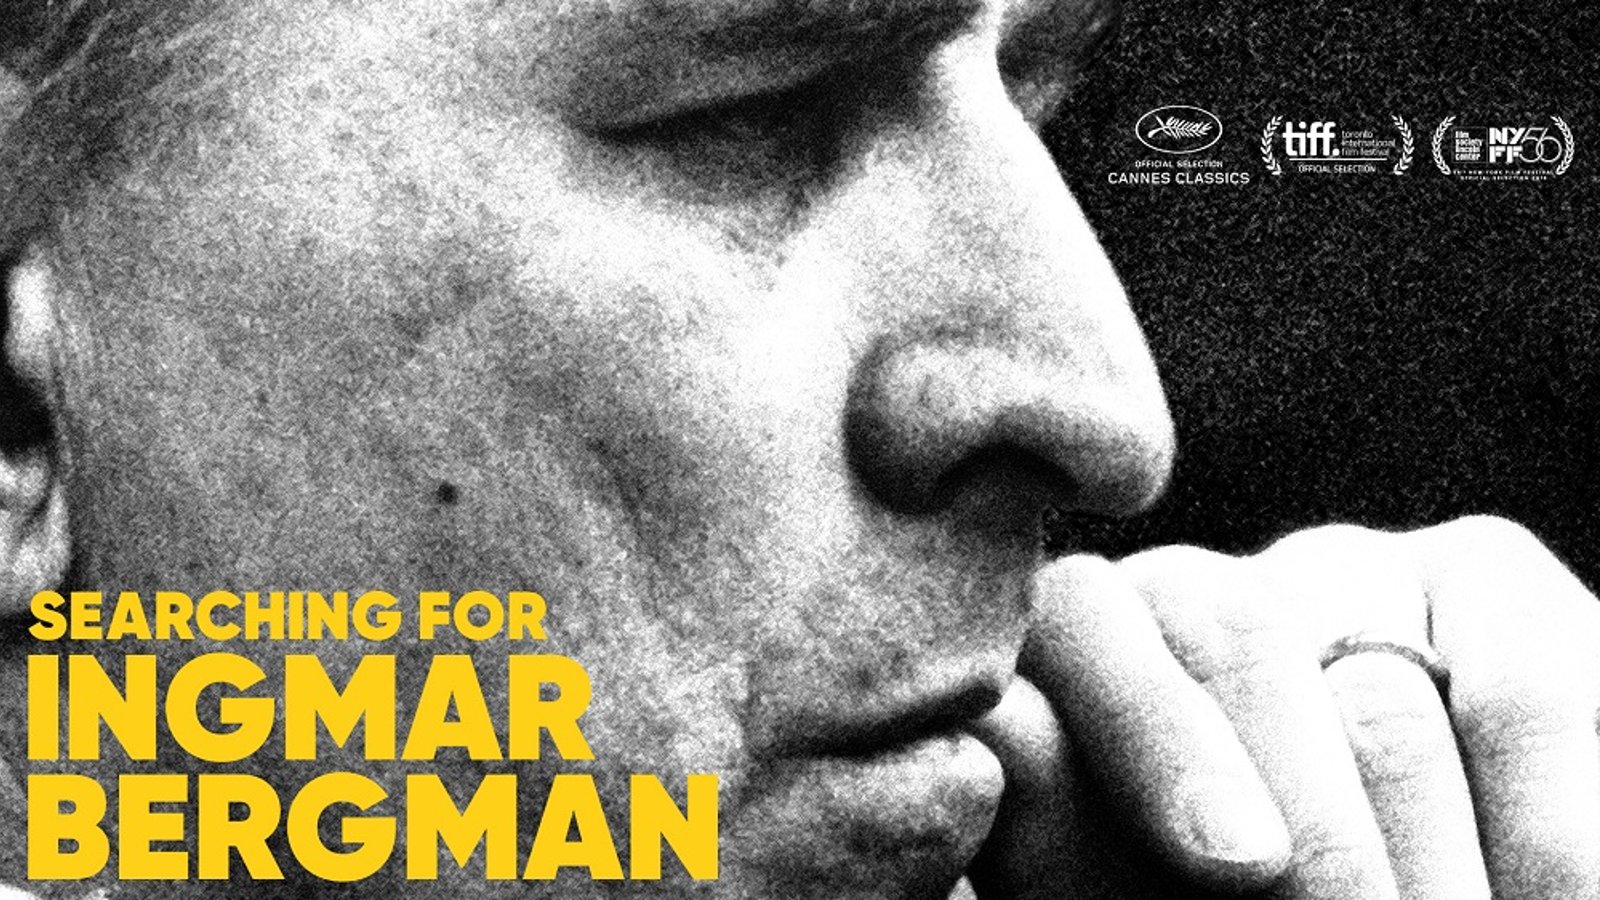 Searching For Ingmar Bergman - The History of a Legendary Filmmaker